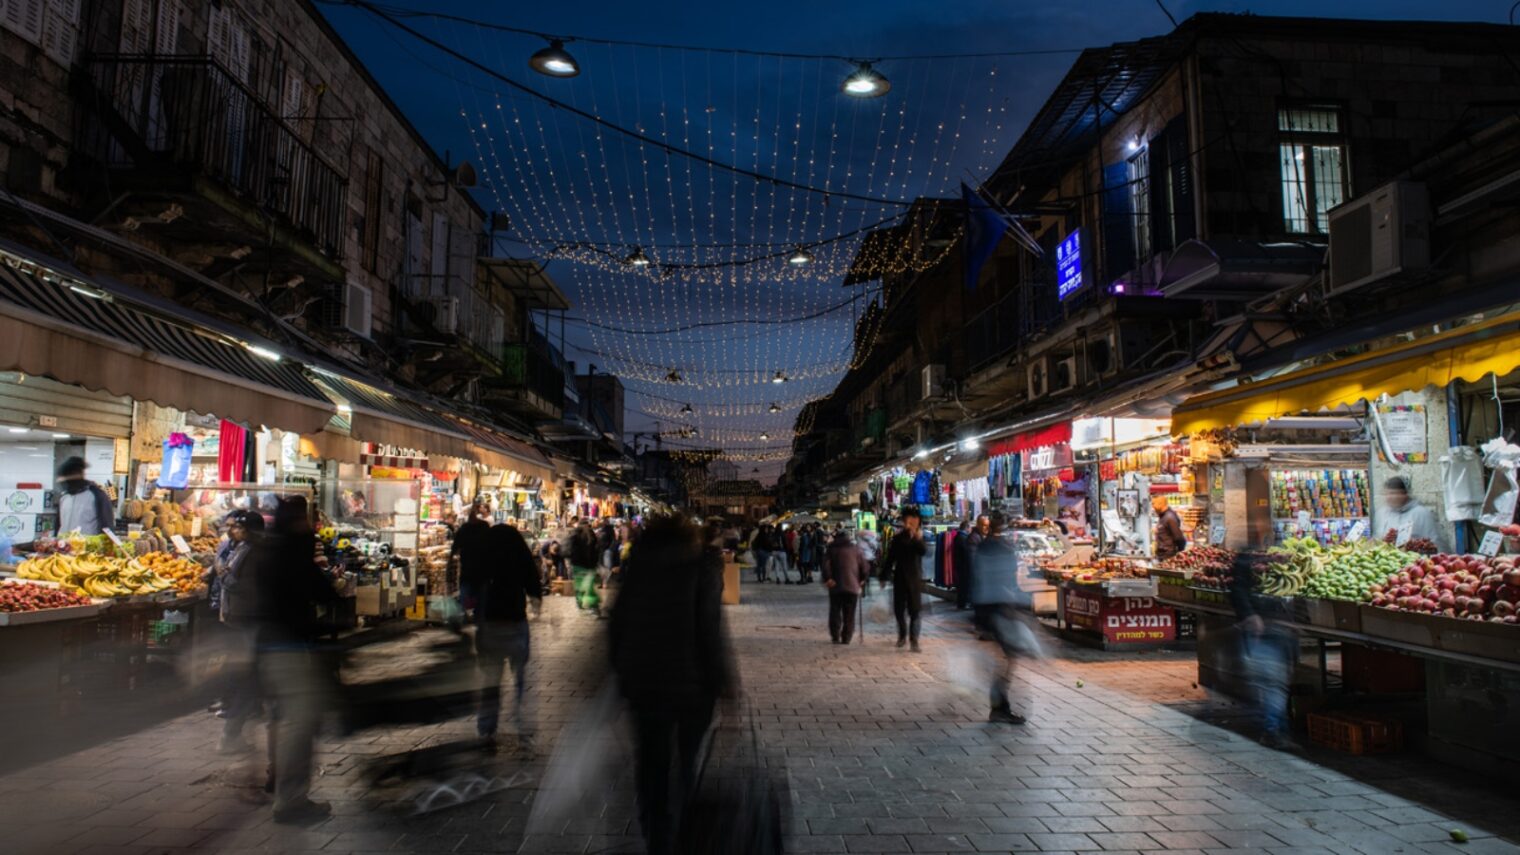 A scene from Machane Yehuda market, Jerusalem. Photo by Yehoshua Halevi